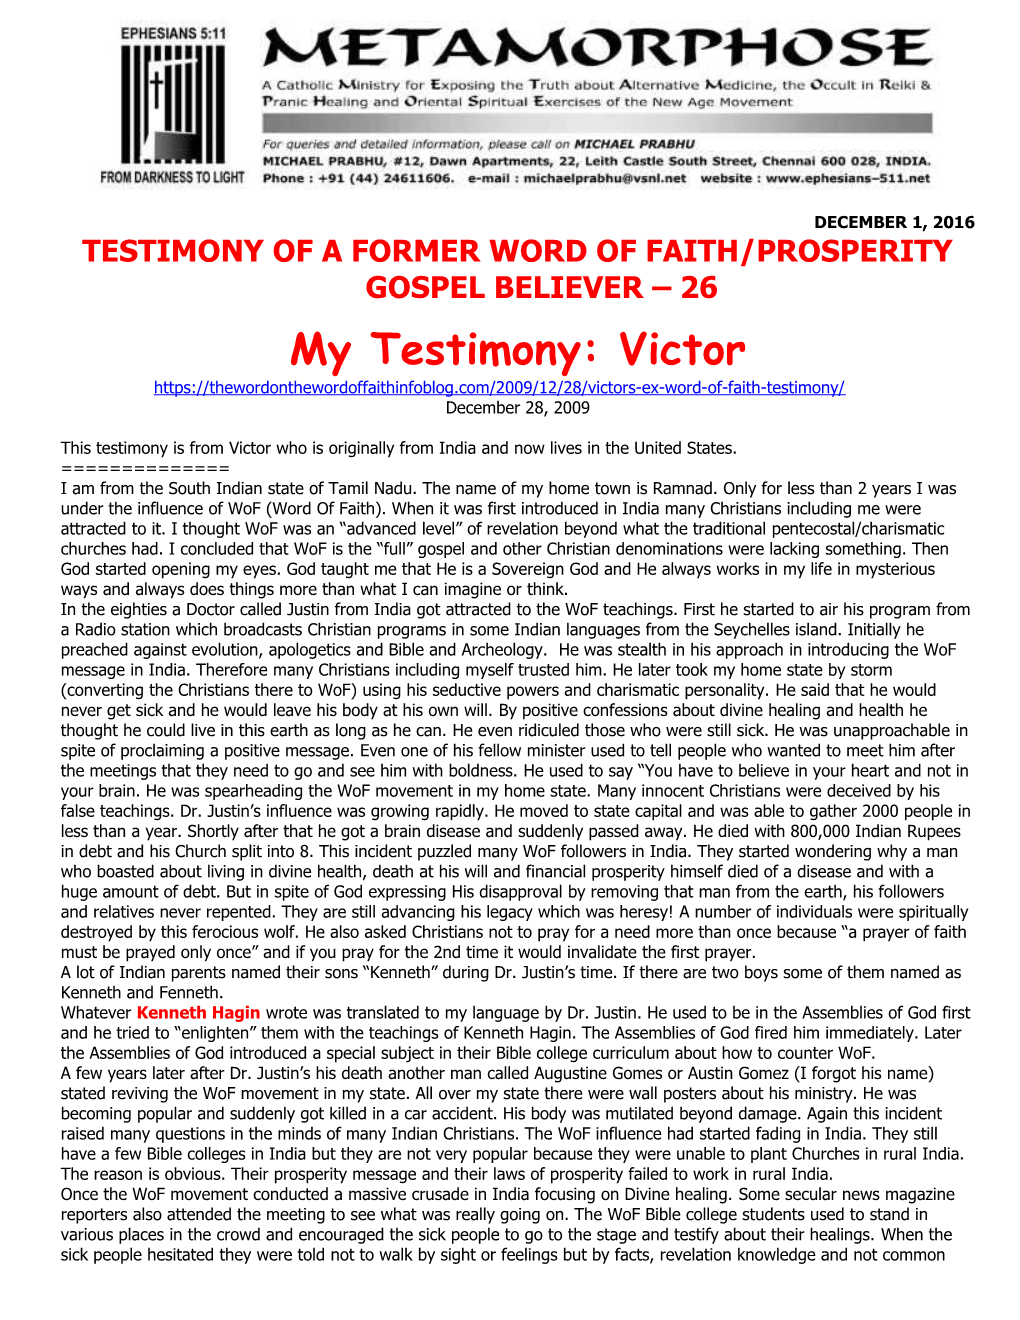 Testimony of a Former Word of Faith/Prosperity Gospel Believer 26